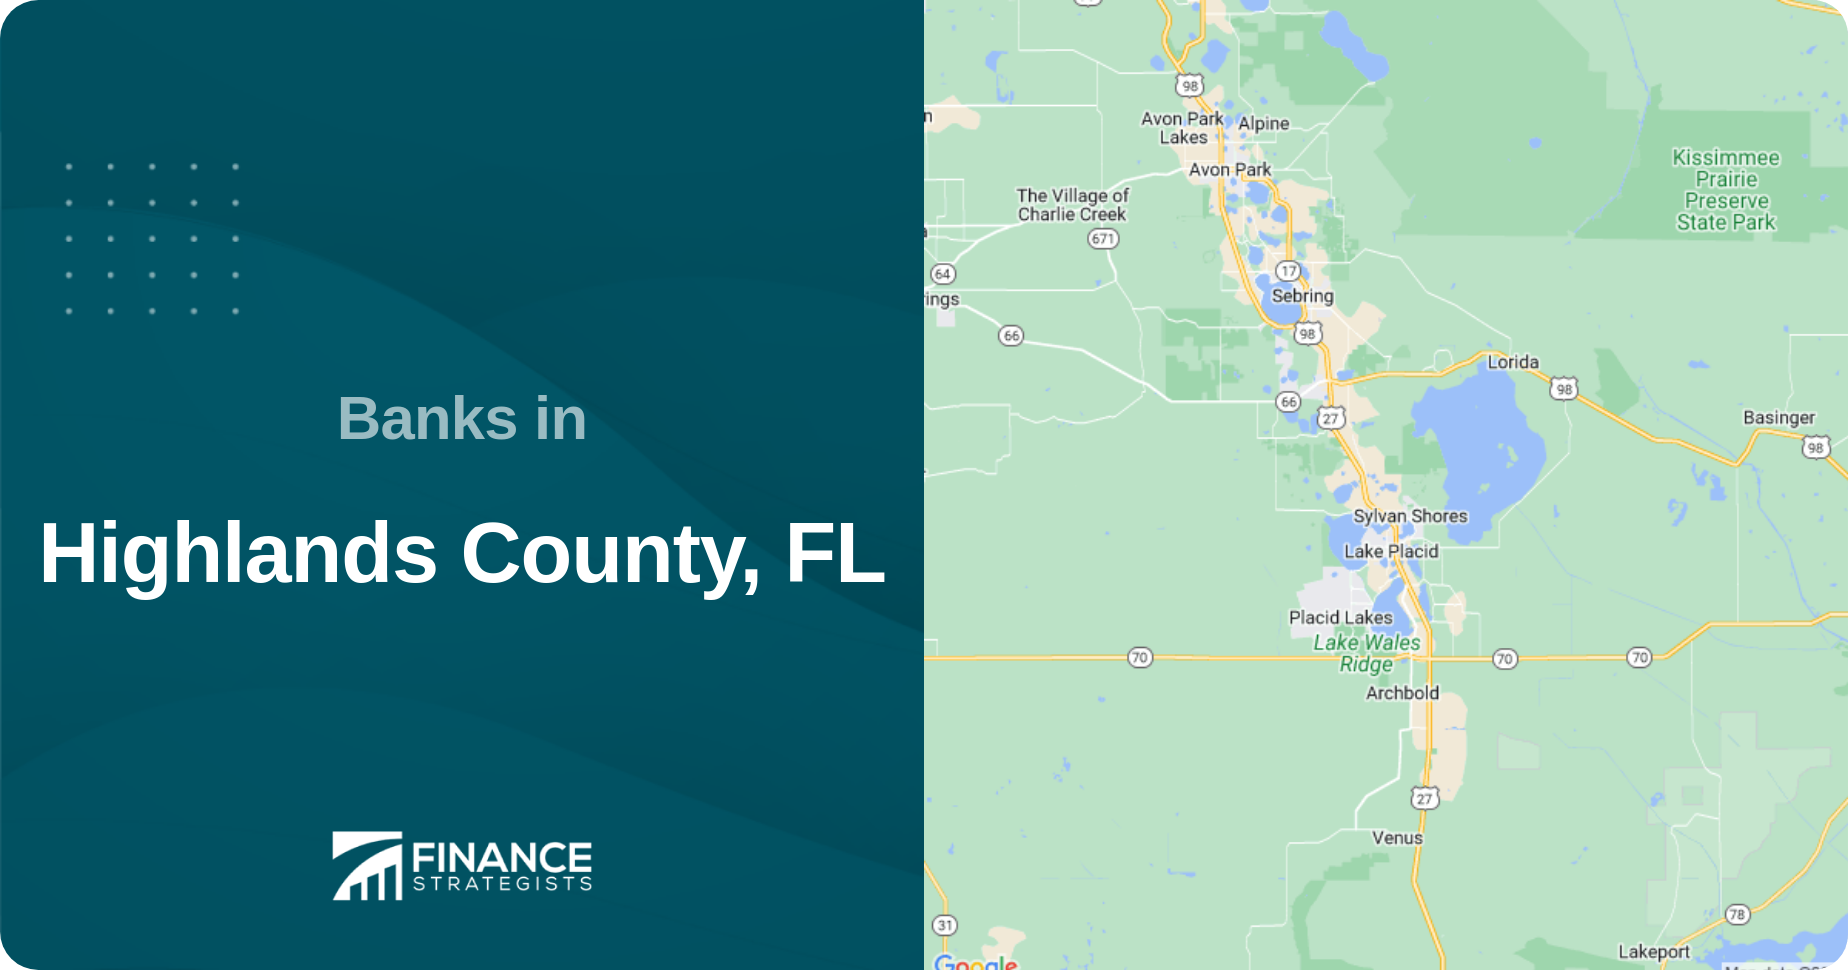 Banks in Highlands County, FL